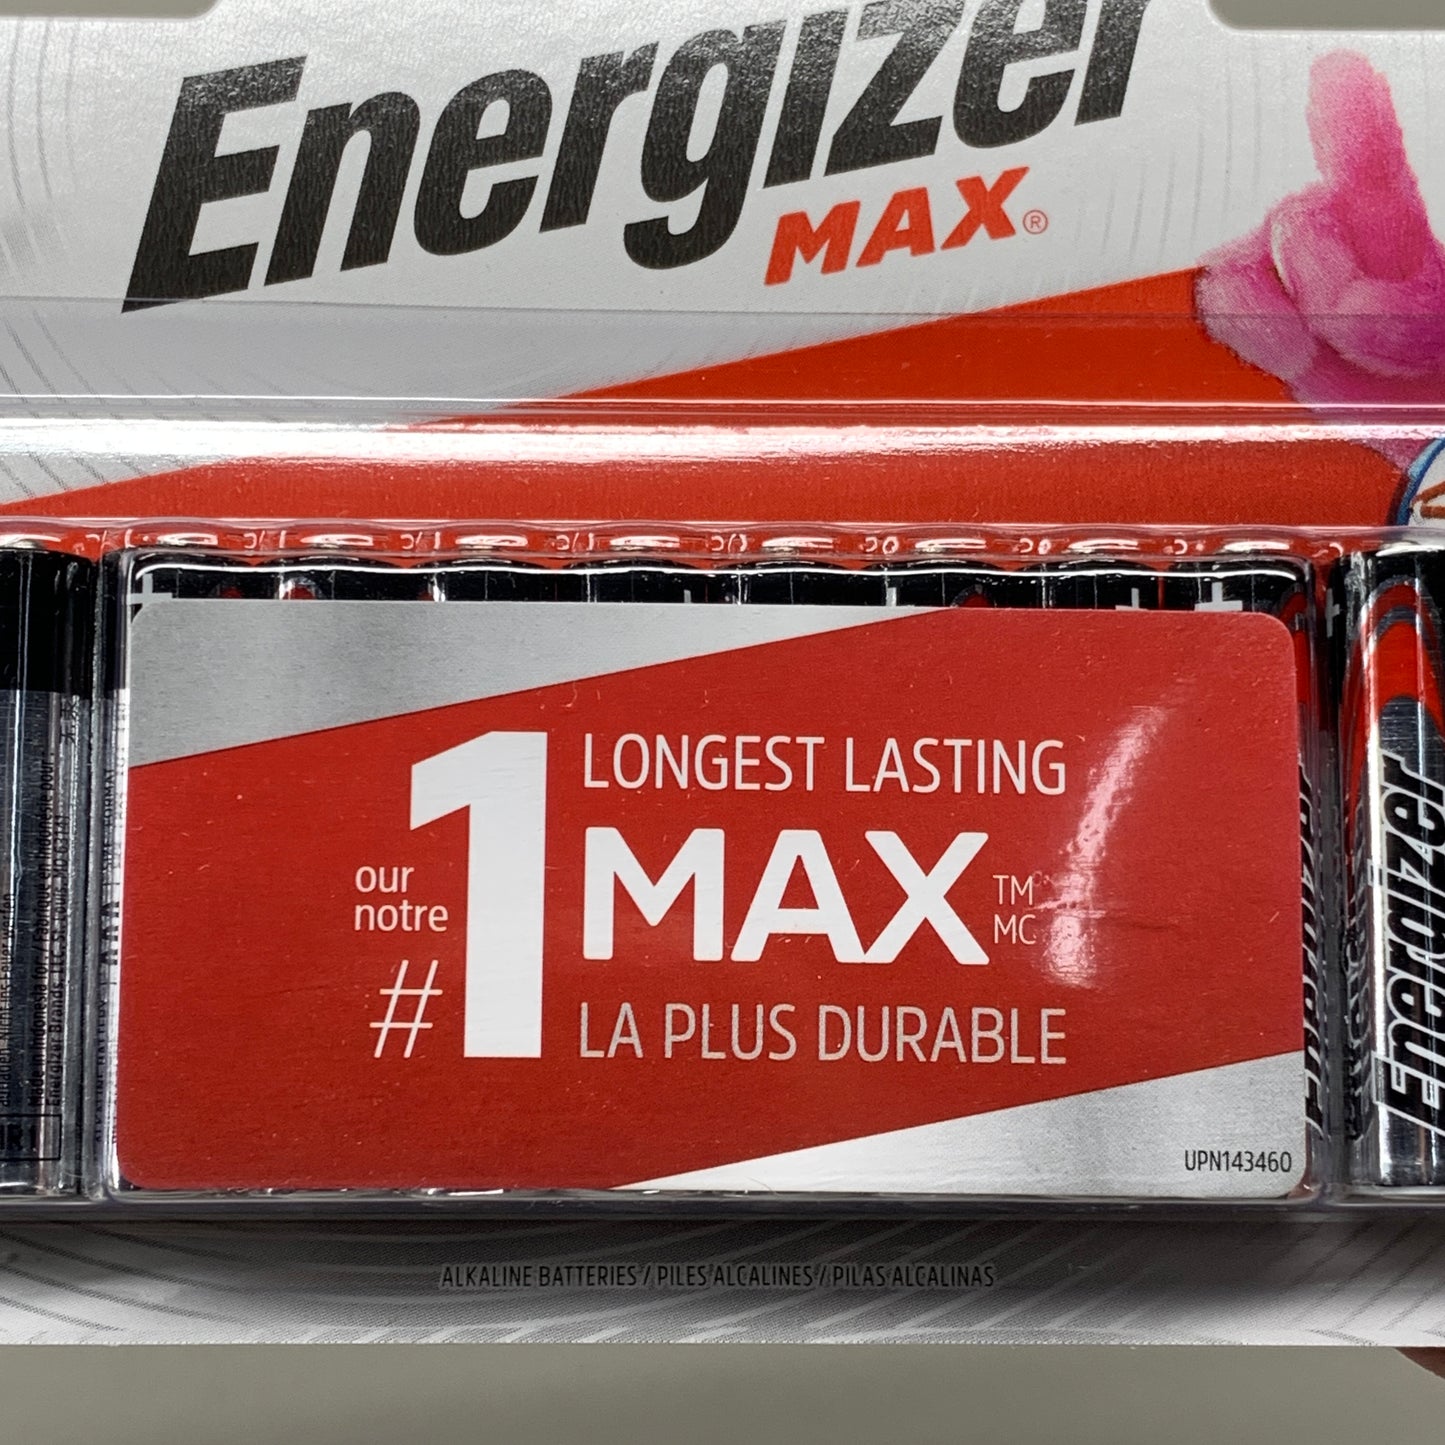 ENERGIZER MAX (2 PACK) AAA Alkaline Batteries 16 Pack (32 Batteries Total) E92LP-16